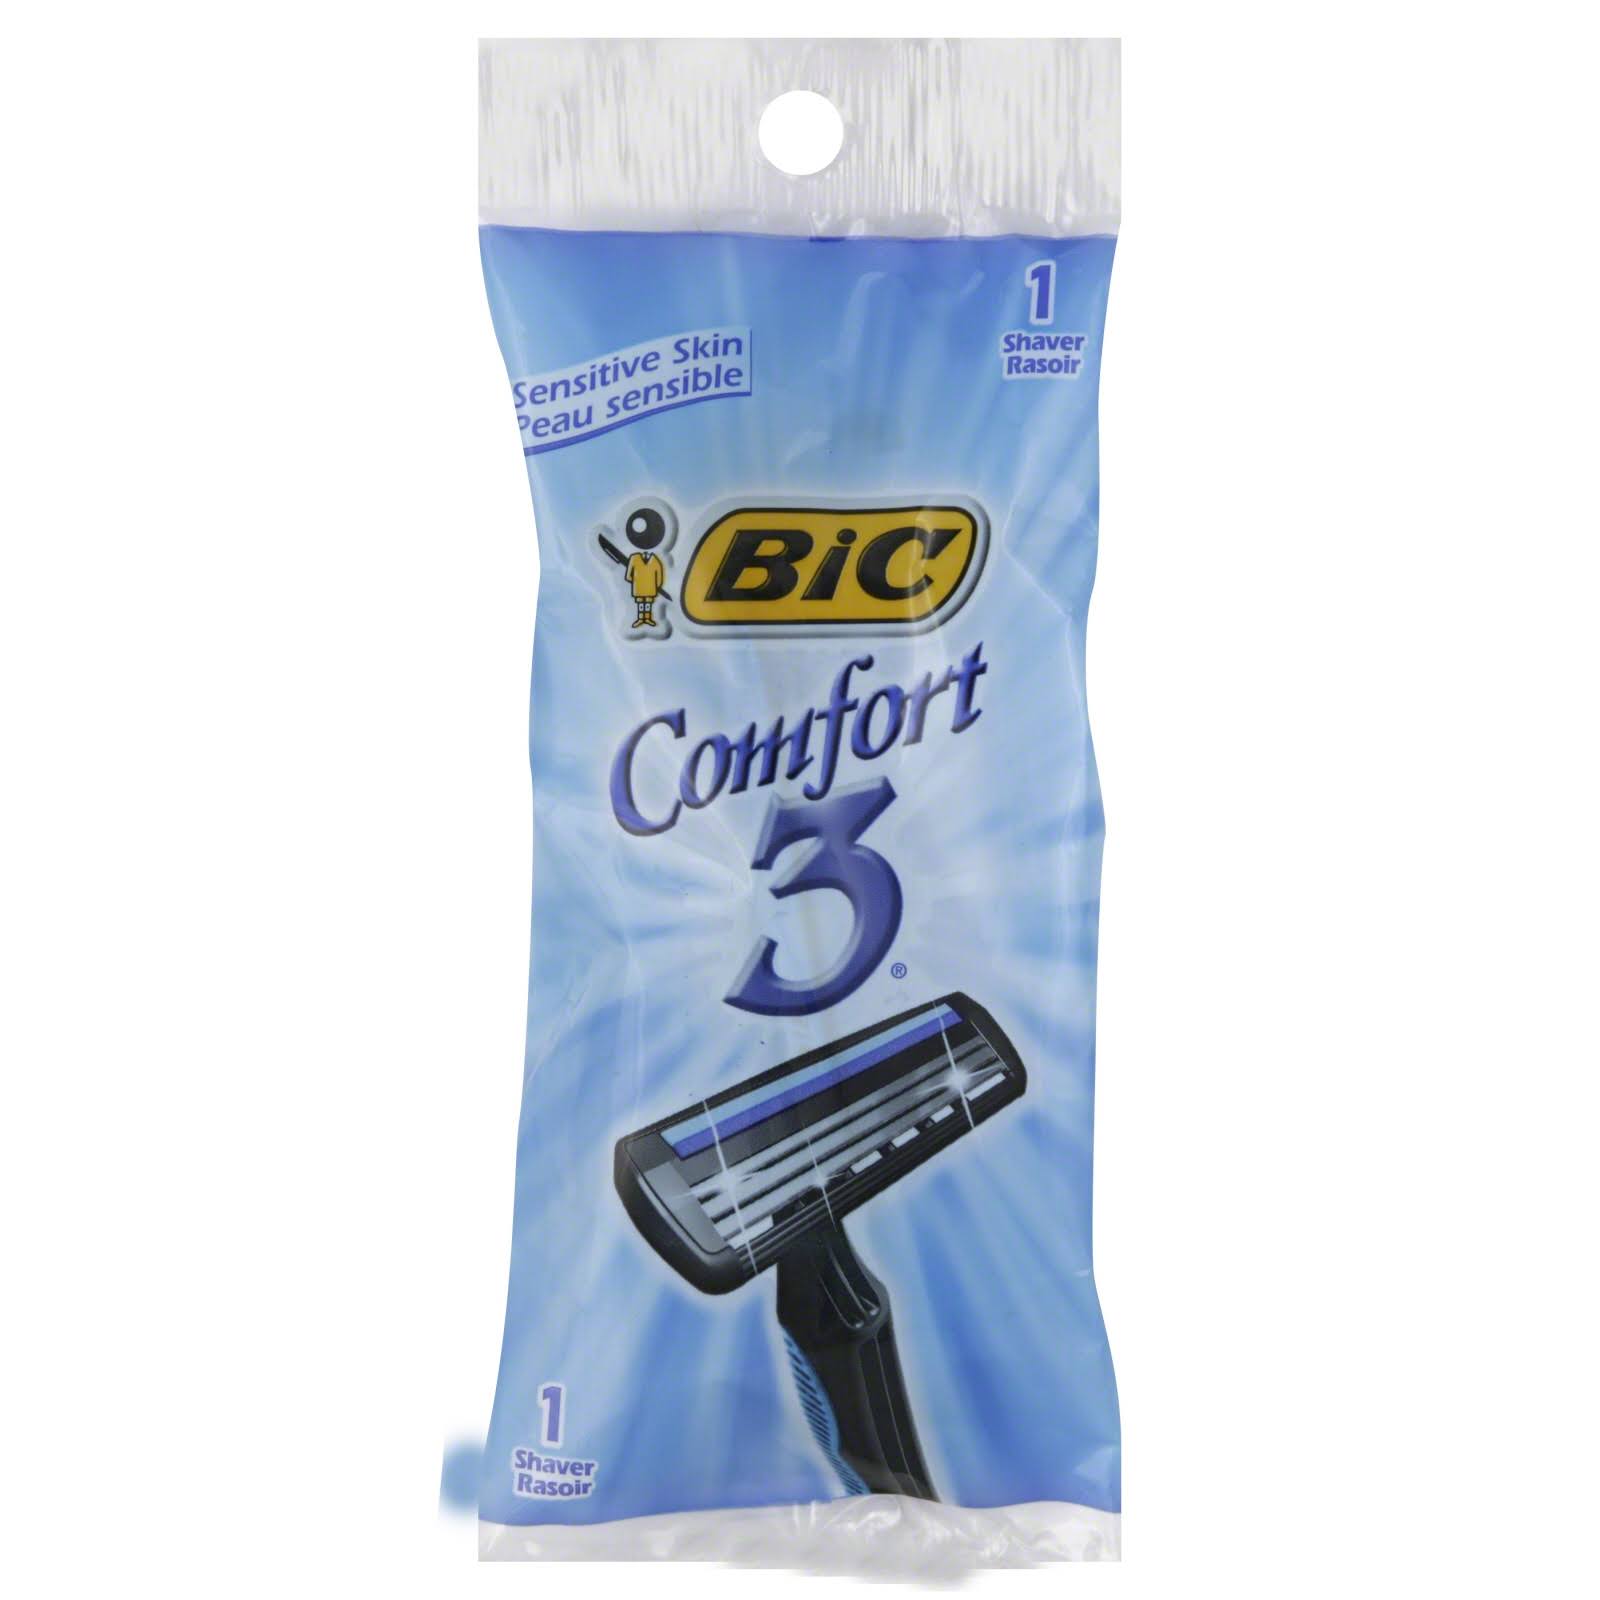 BIC Comfort 3 for Men with Sensitive Skin